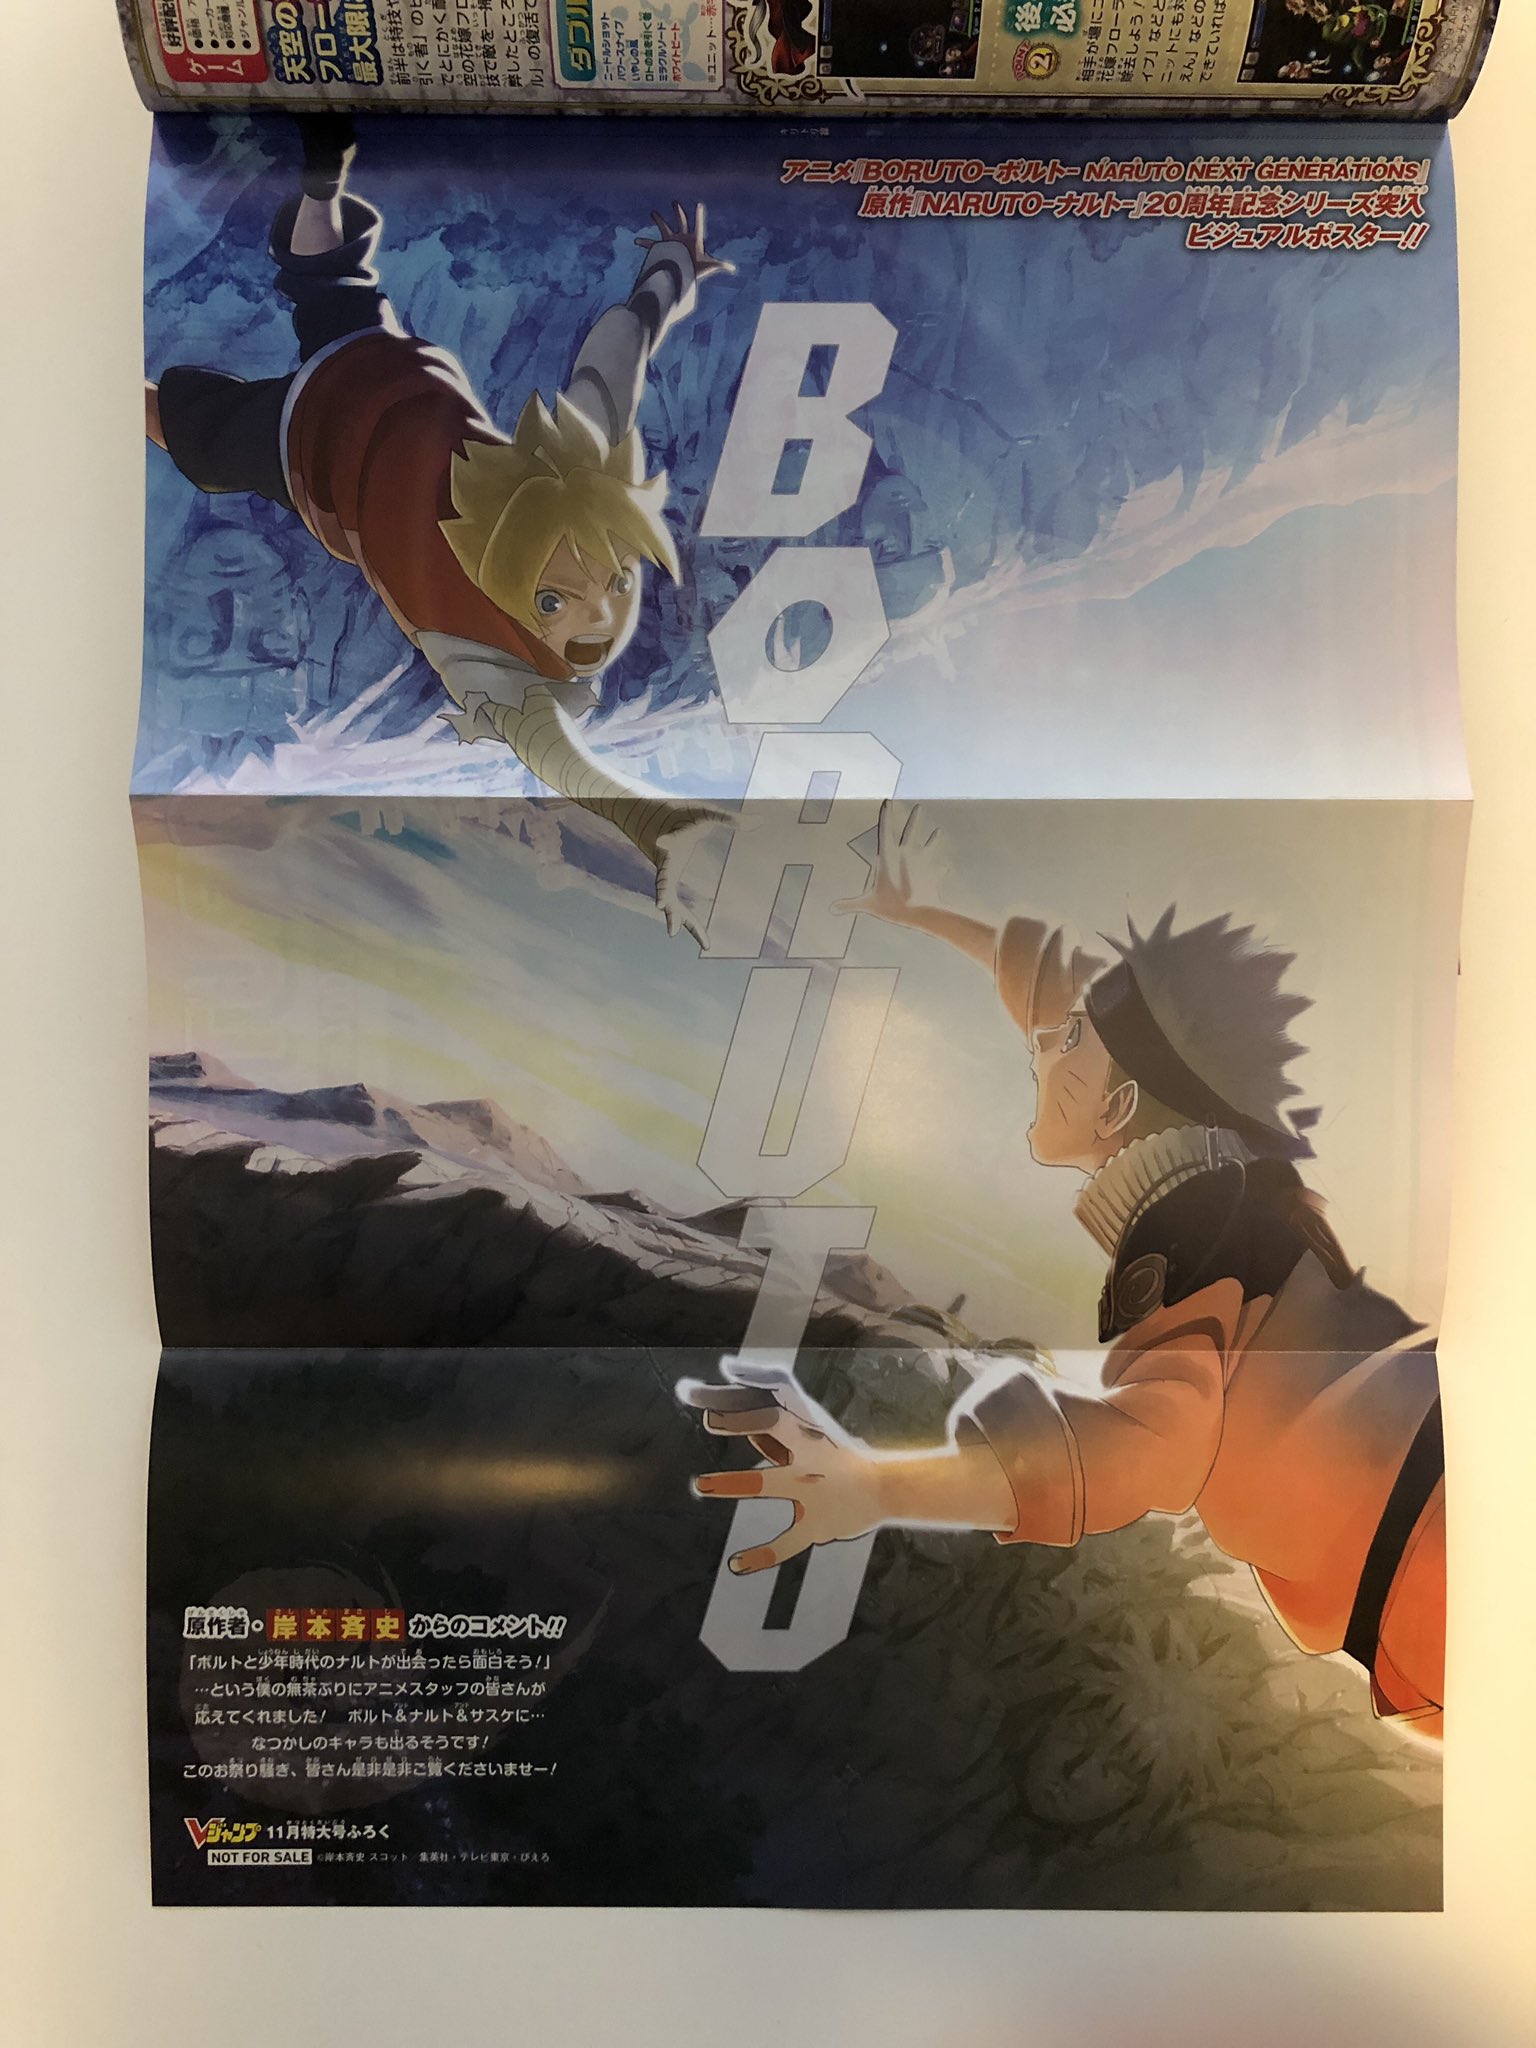 Naruto Boruto 原作公式 原作 Naruto 周年 本日 連載開始からちょうど年 皆様いつも応援ありがとうございます アニメ Boruto では 10月から周年記念シリーズ突入 ボルトが 少年時代のナルトと出会って 本日発売のv